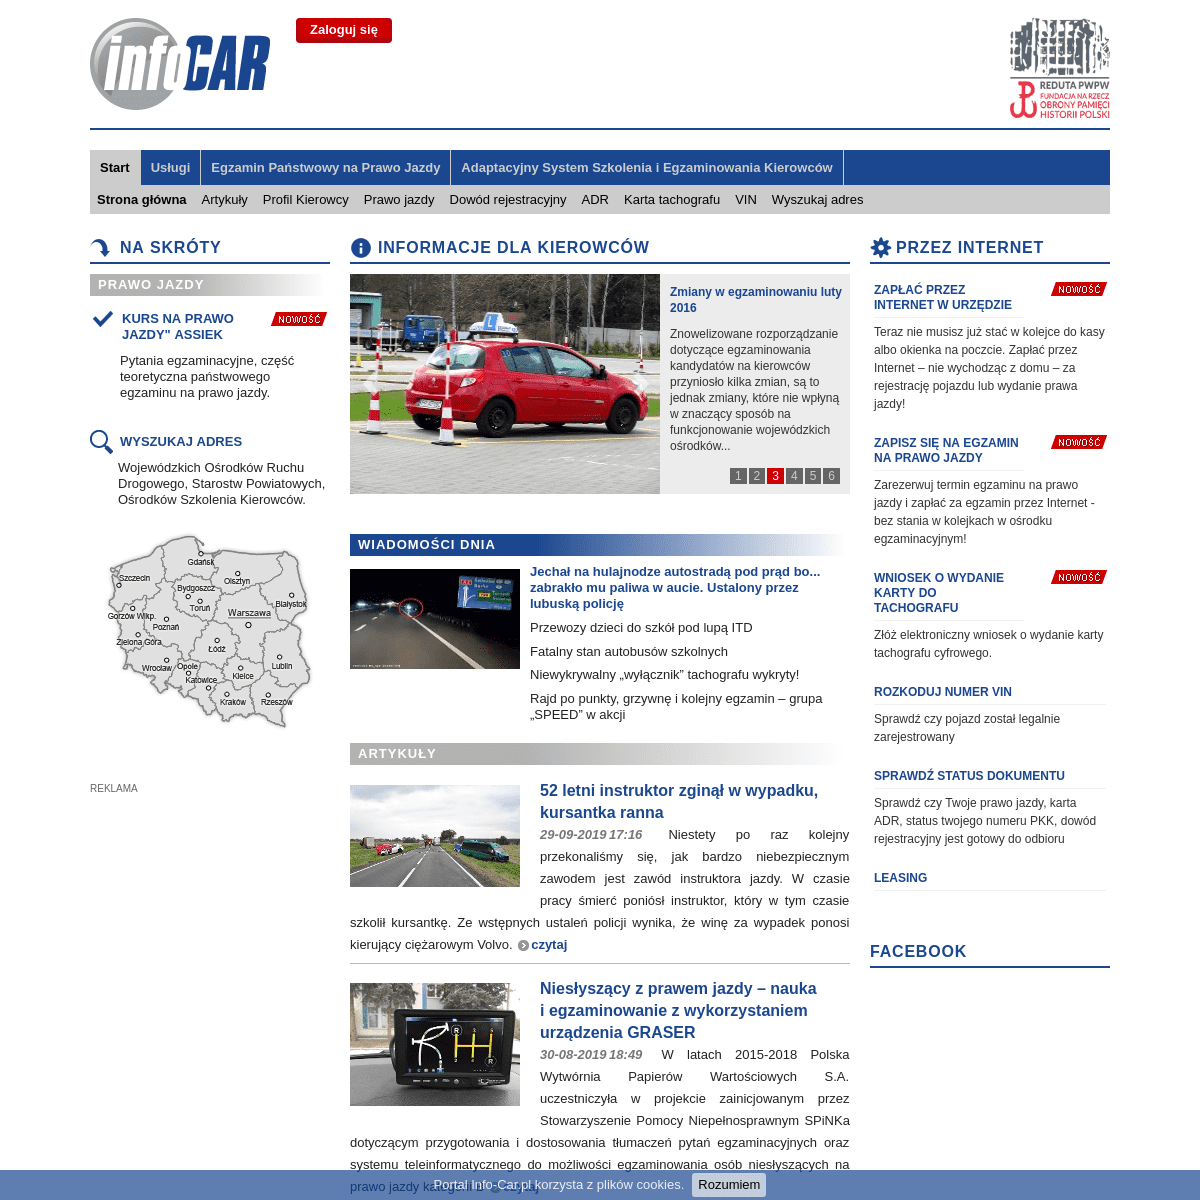 A complete backup of info-car.pl